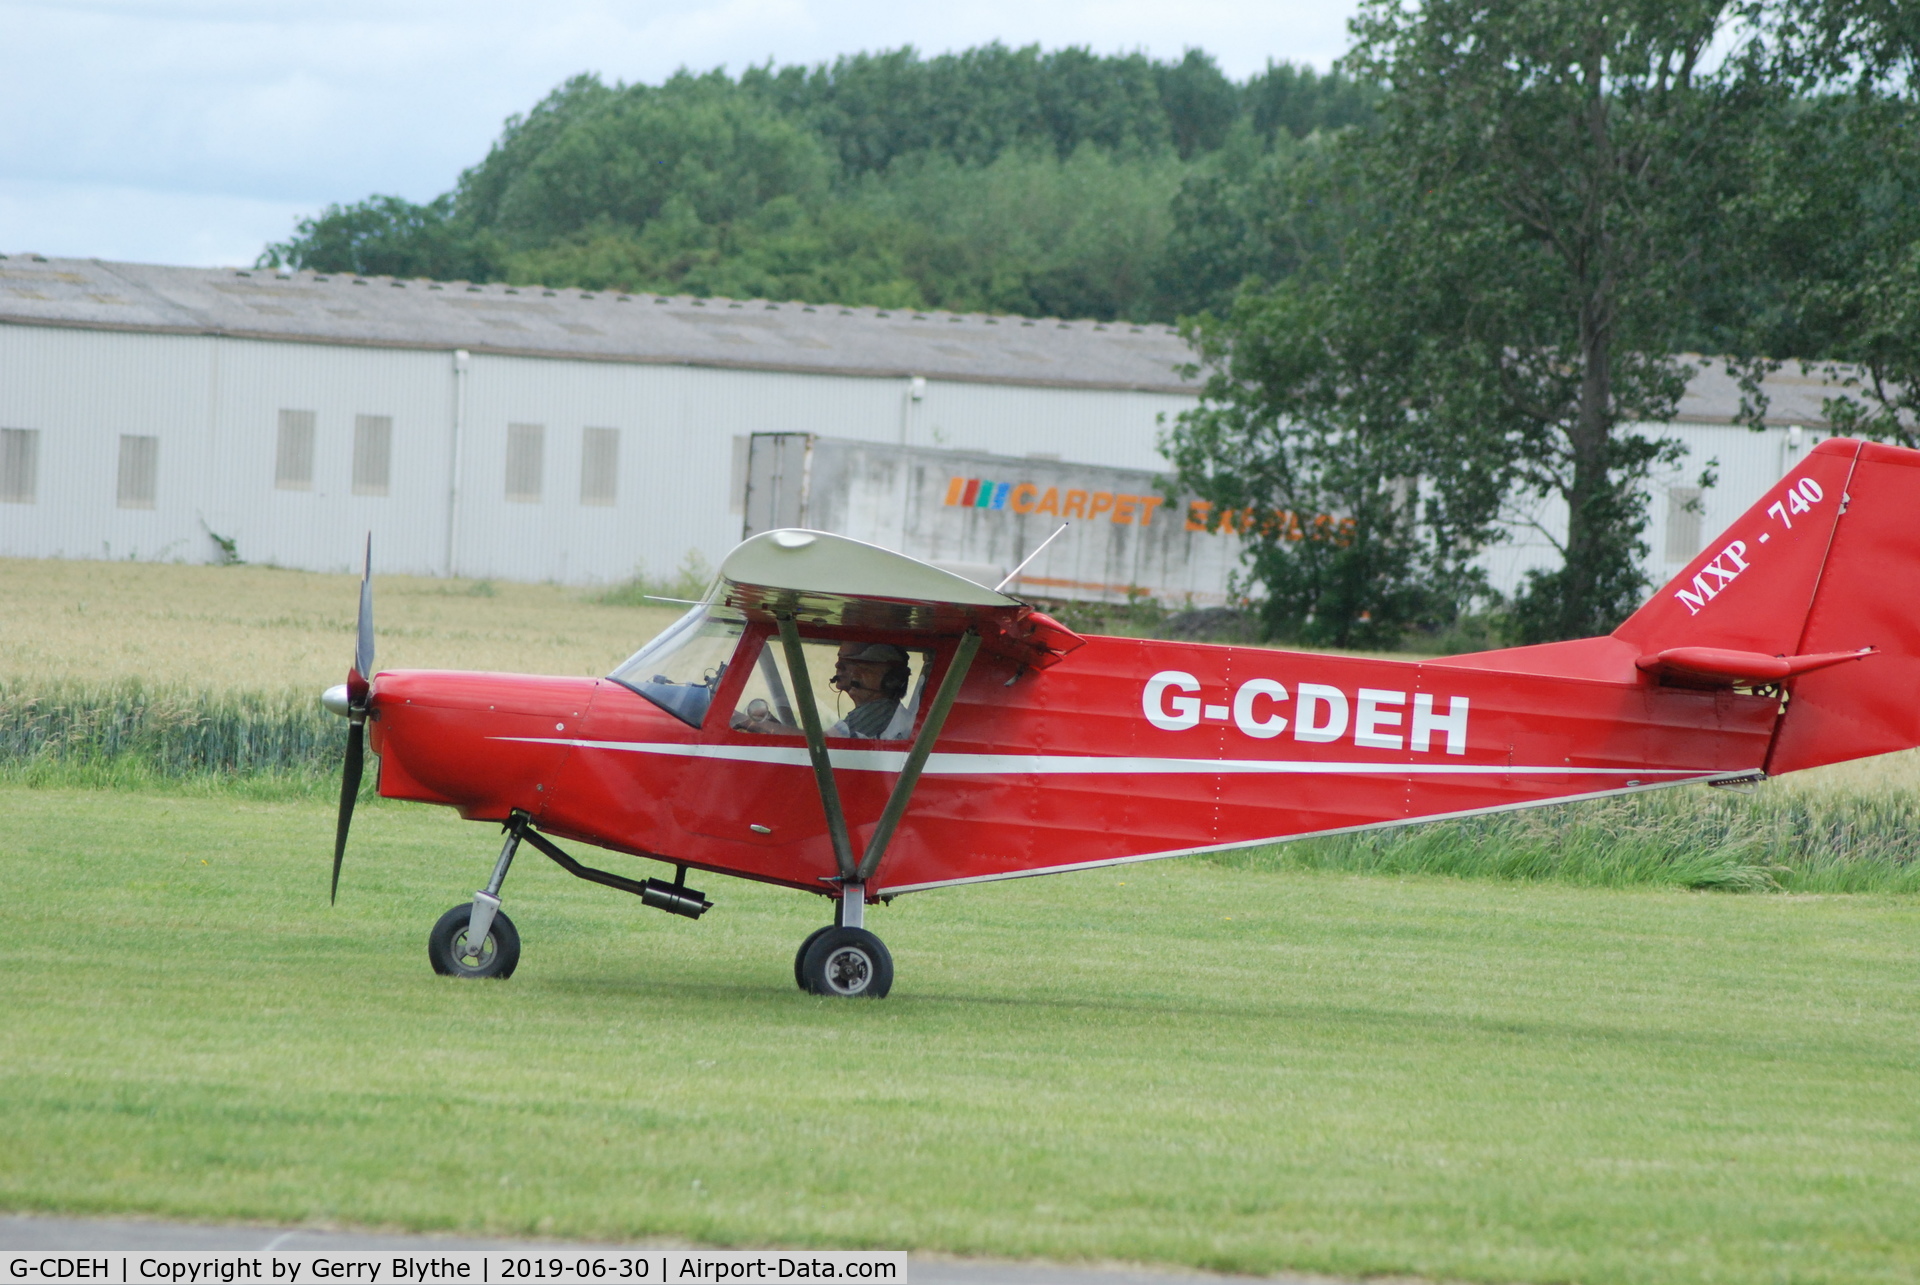 G-CDEH, 2004 ICP MXP-740 Savannah LS(1) C/N BMAA/HB/349, Taken at Breighton Air Day August 2019